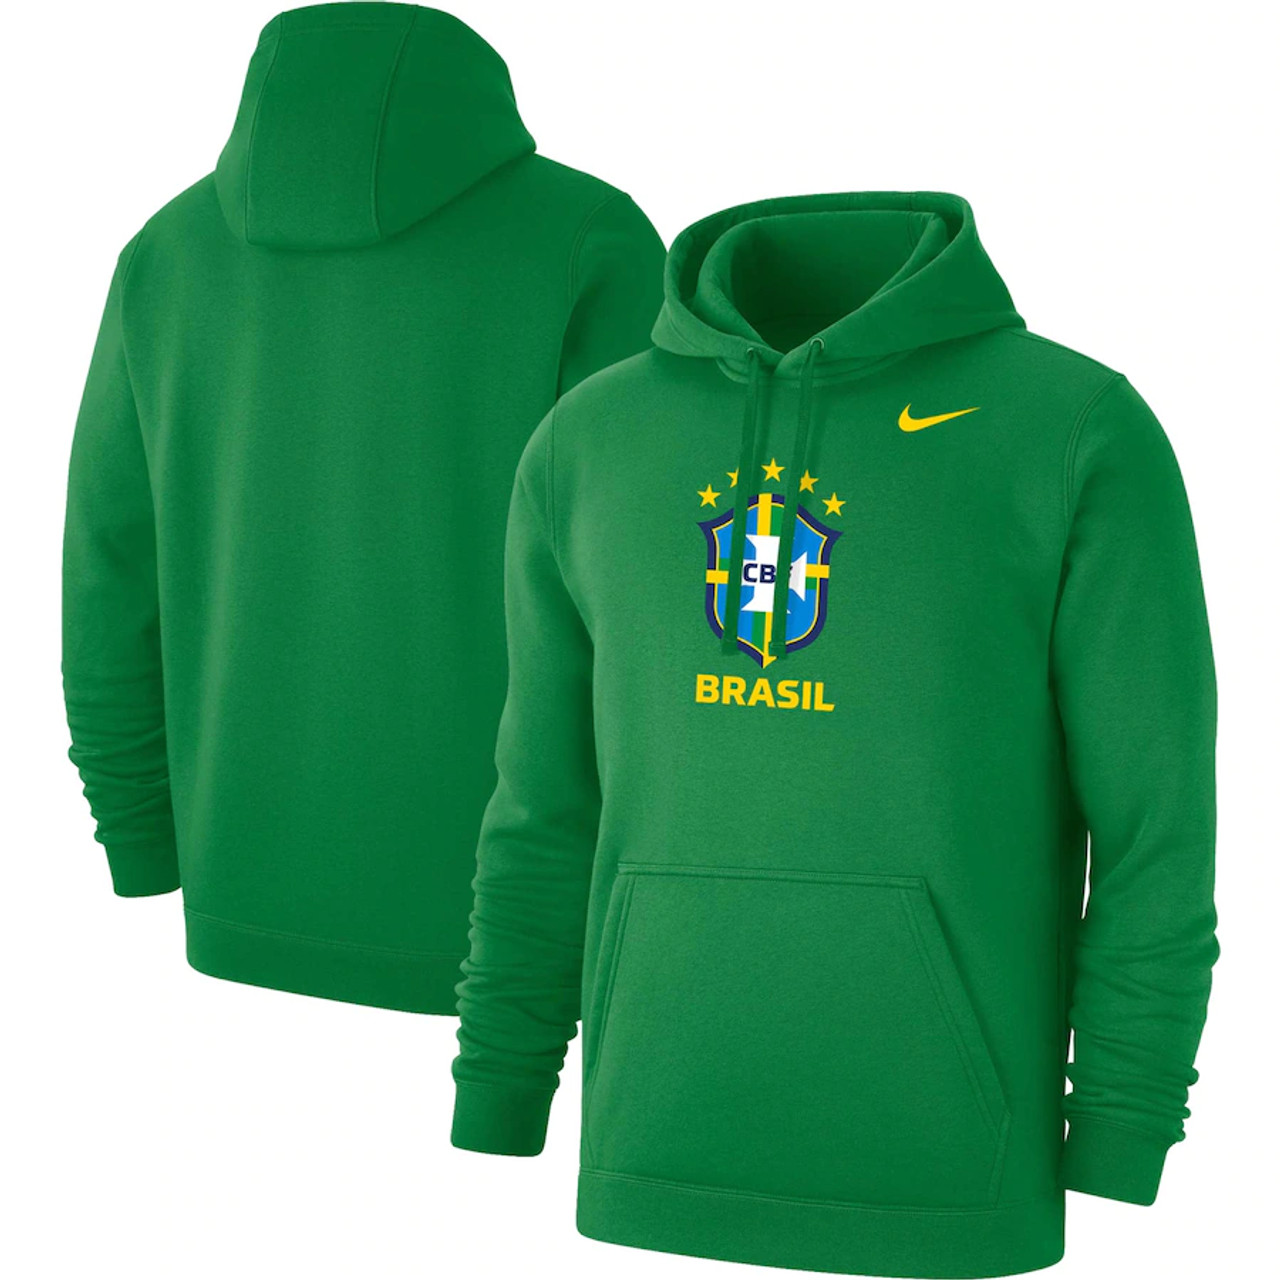 Nike Football World Cup 2022 Brazil unisex travel fleece hoodie in